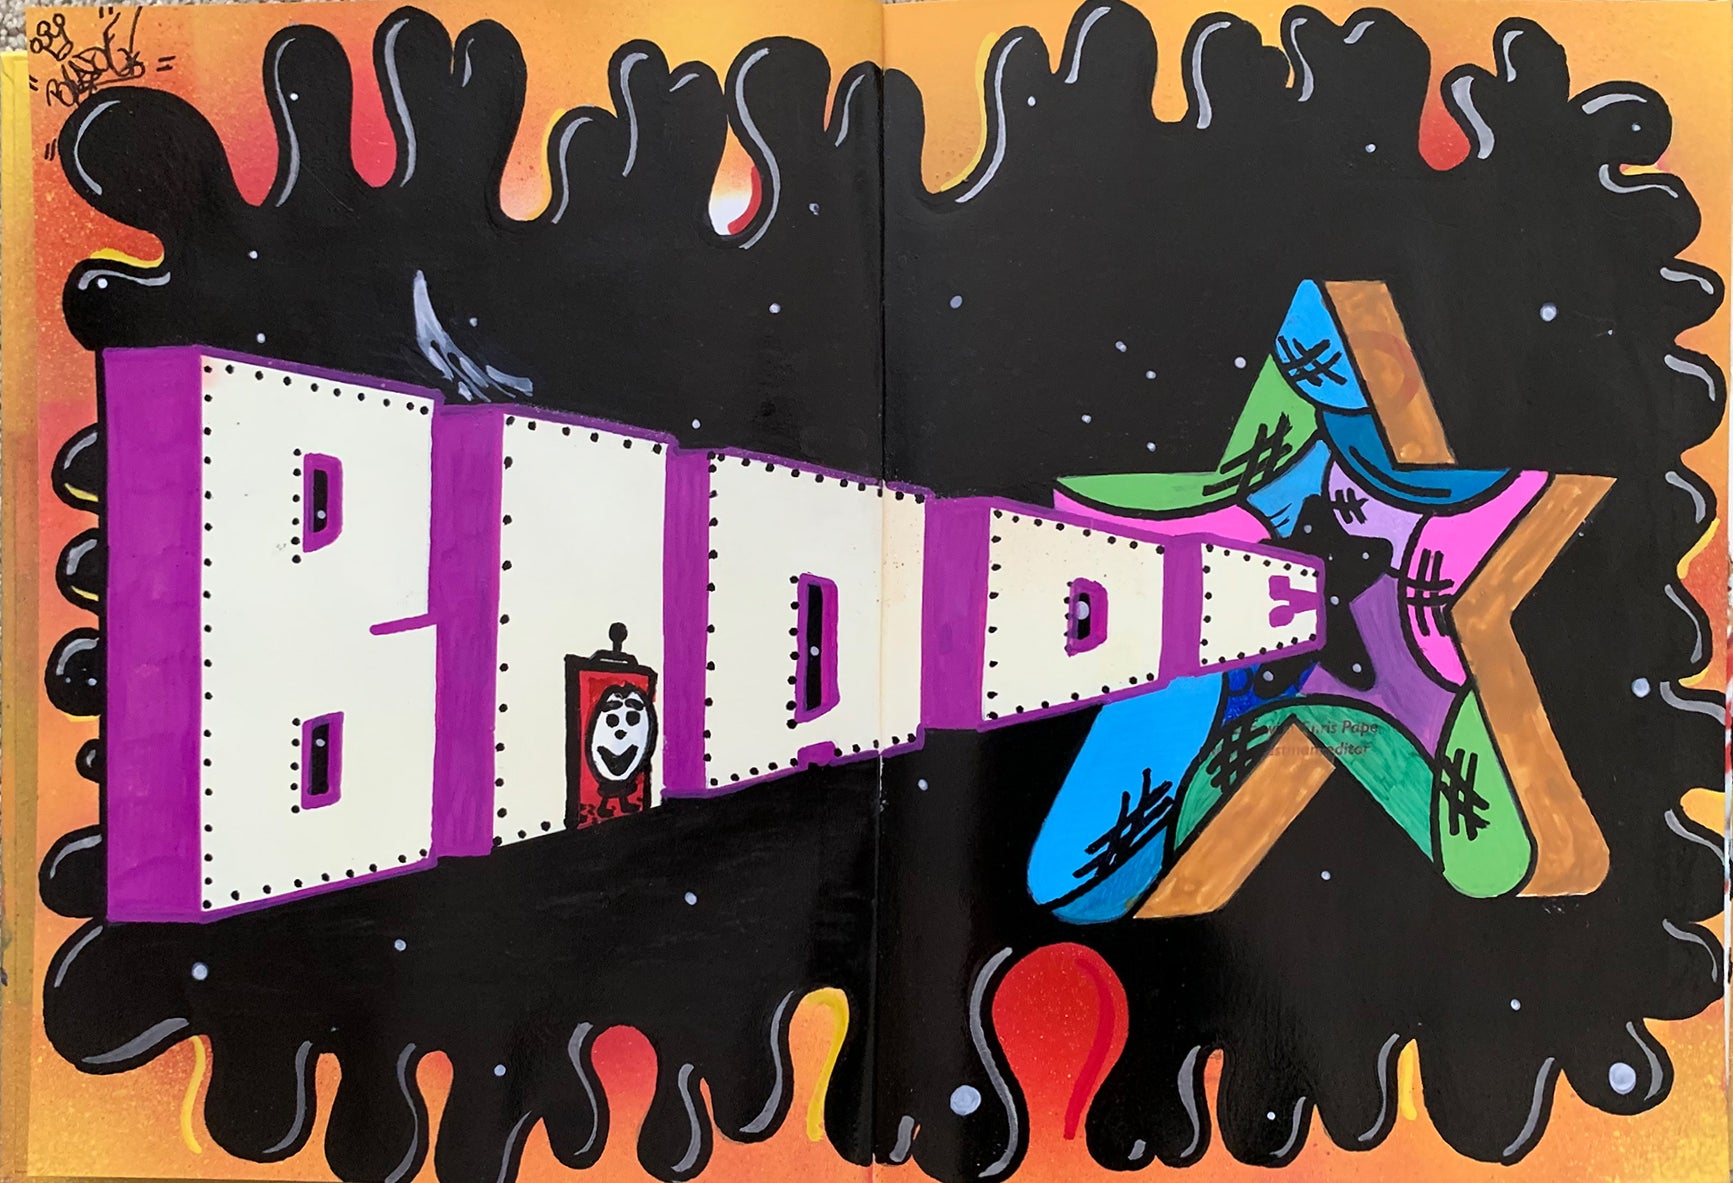 BLADE -"King of graffiti" Custom Book Drawing